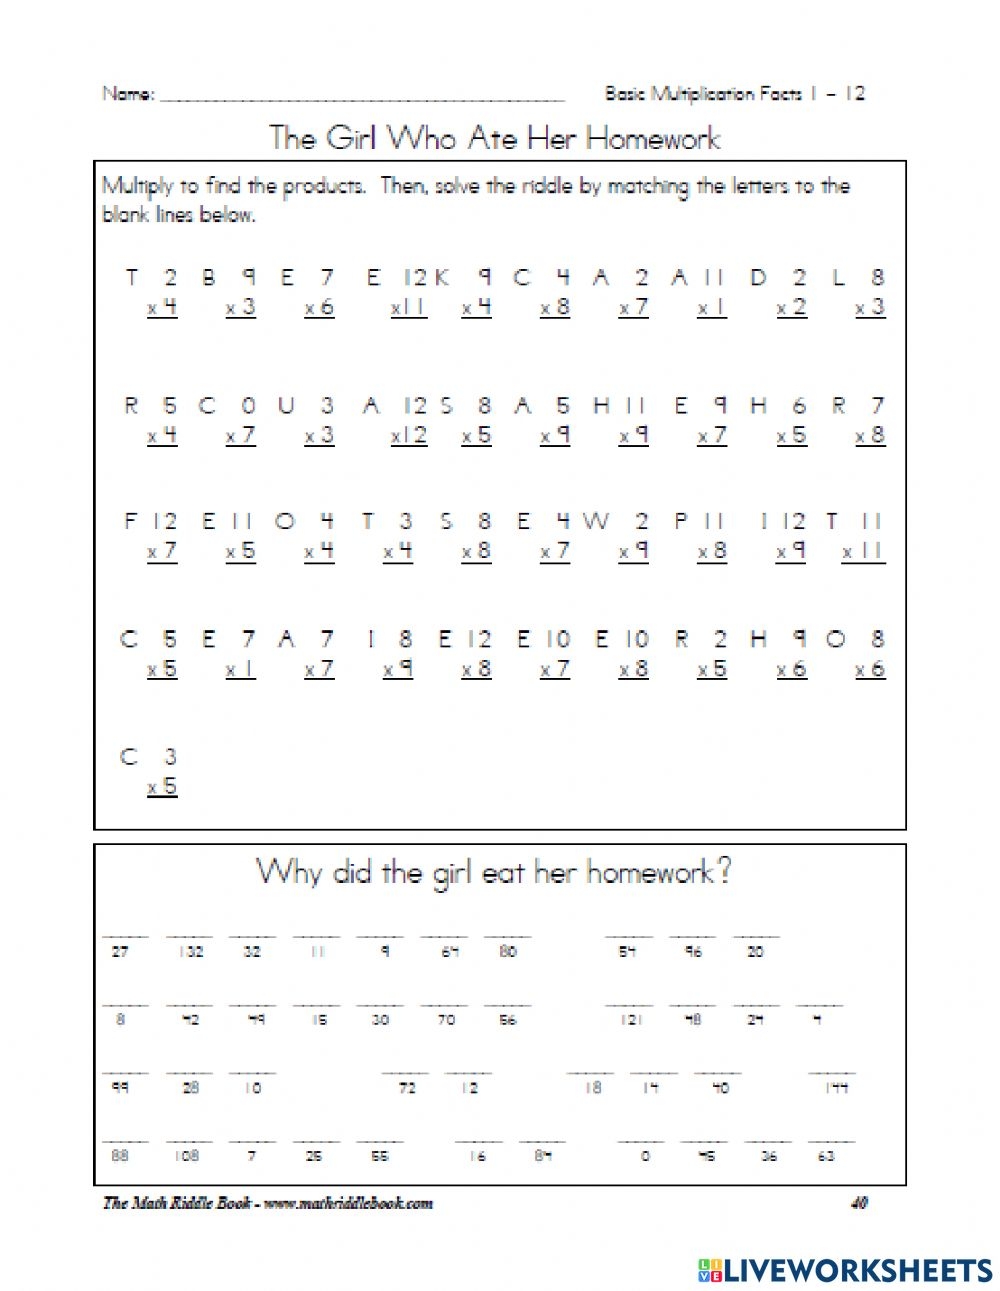 multiplication-riddle-worksheet-math-worksheet-answers